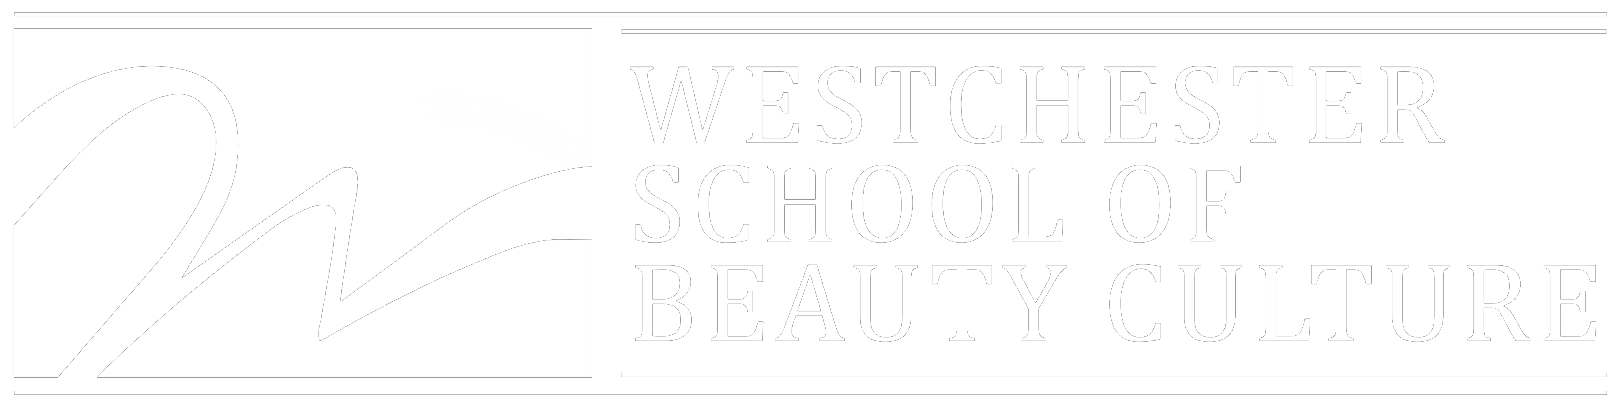 Westchester School of Beauty Culture